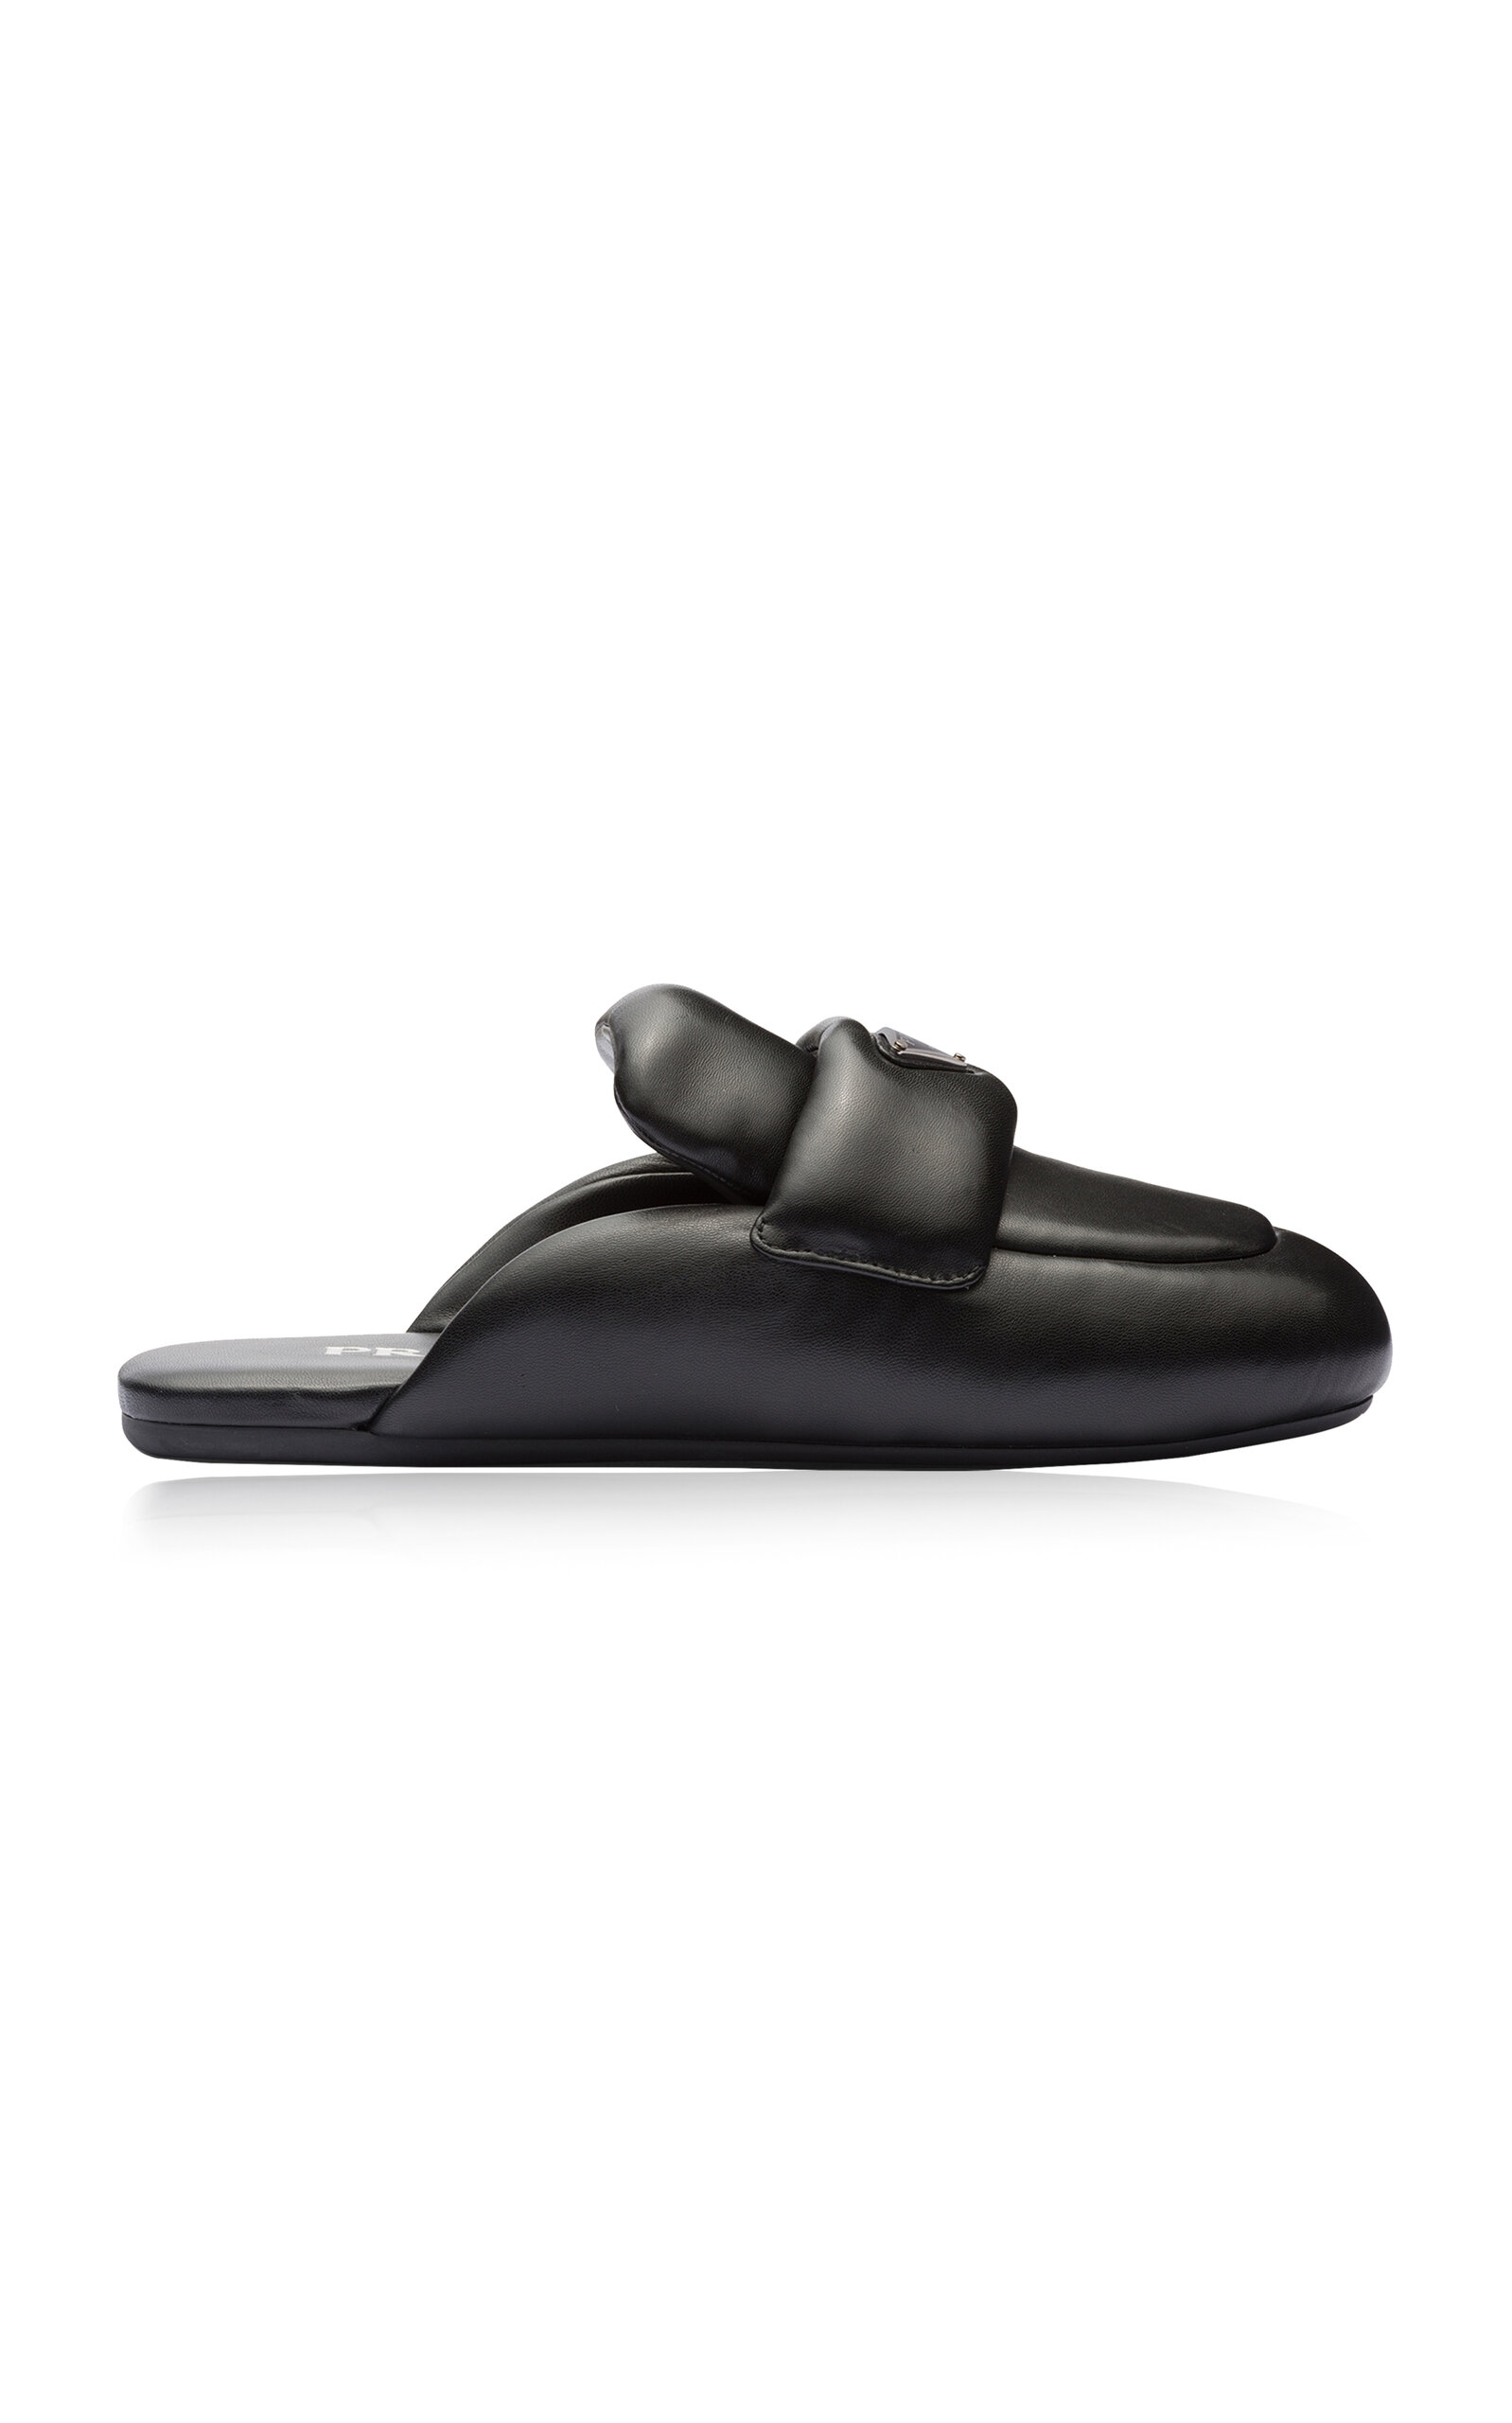 Prada - Padded Leather Loafer Mules - Black - IT 35 - Moda Operandi